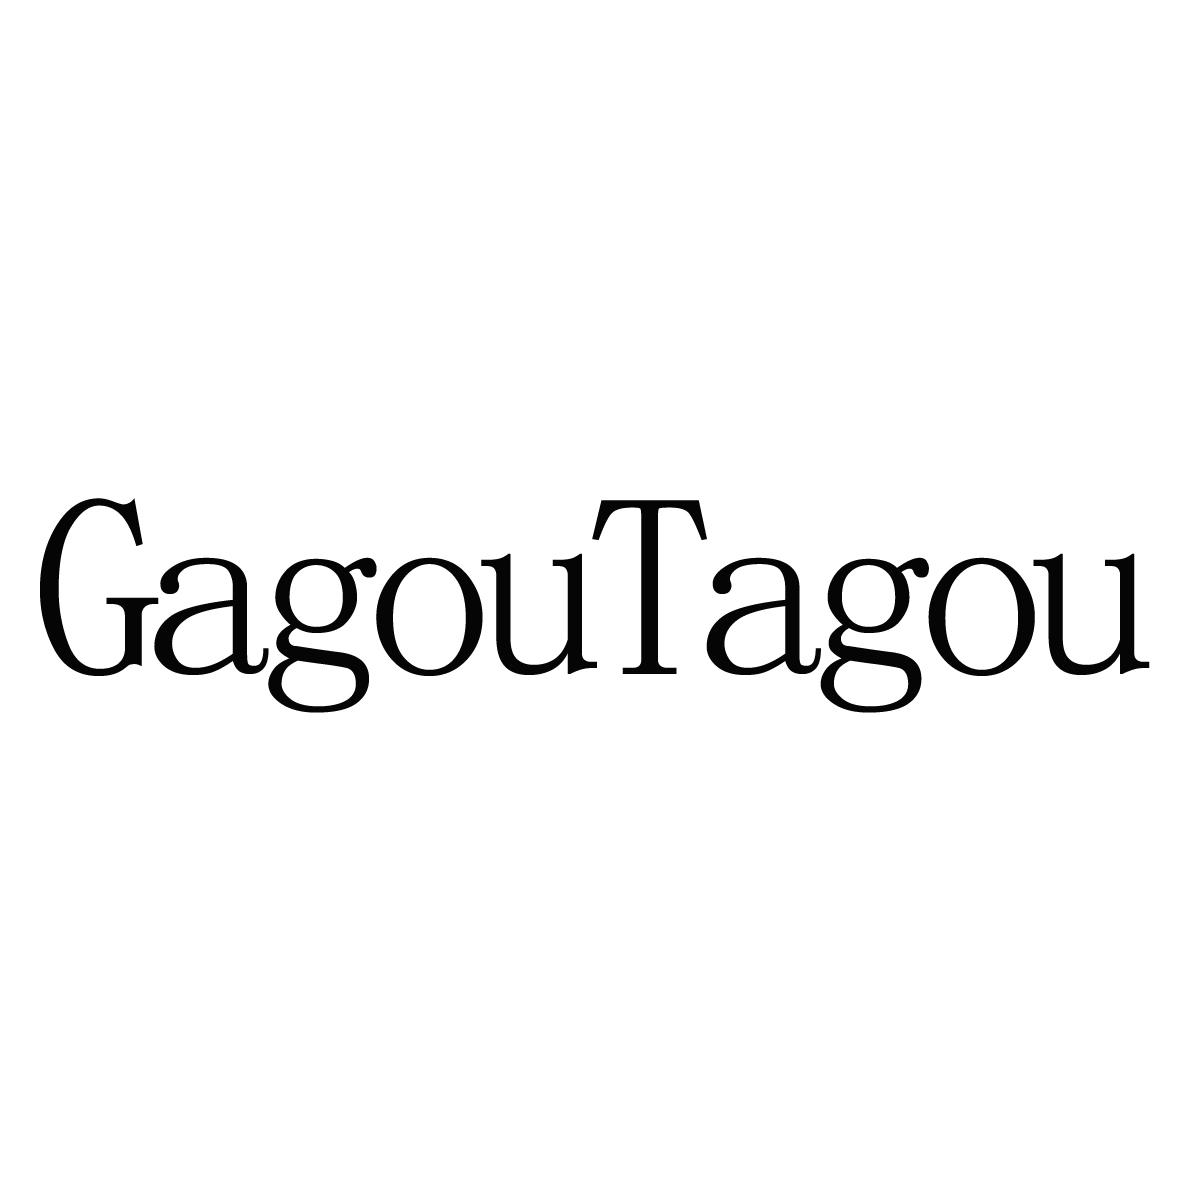 GAGOUTAGOU